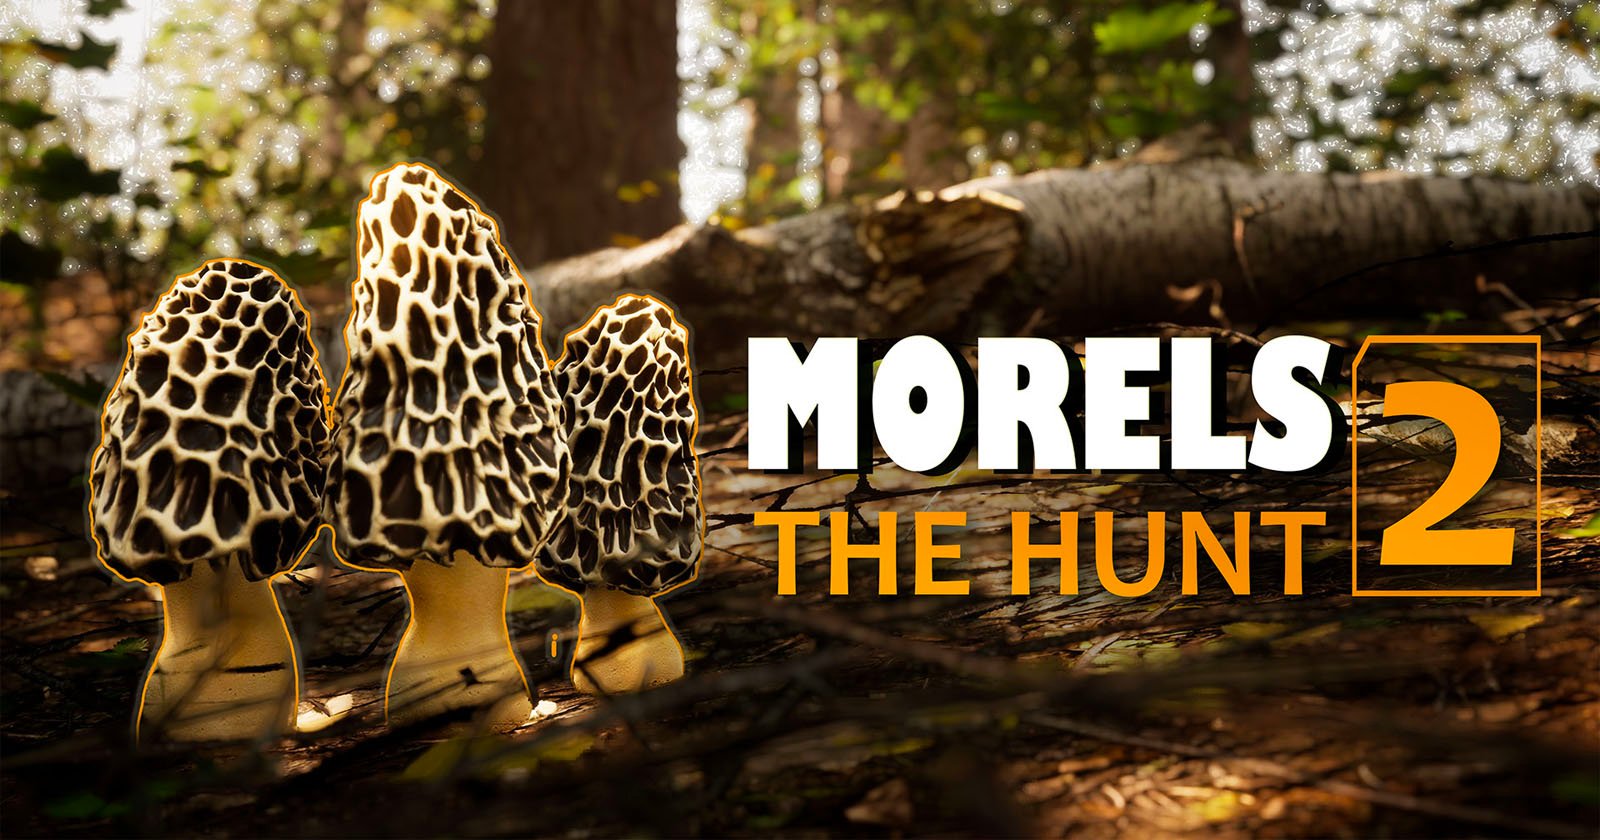  morels combines mushroom hunting wildlife photography into 